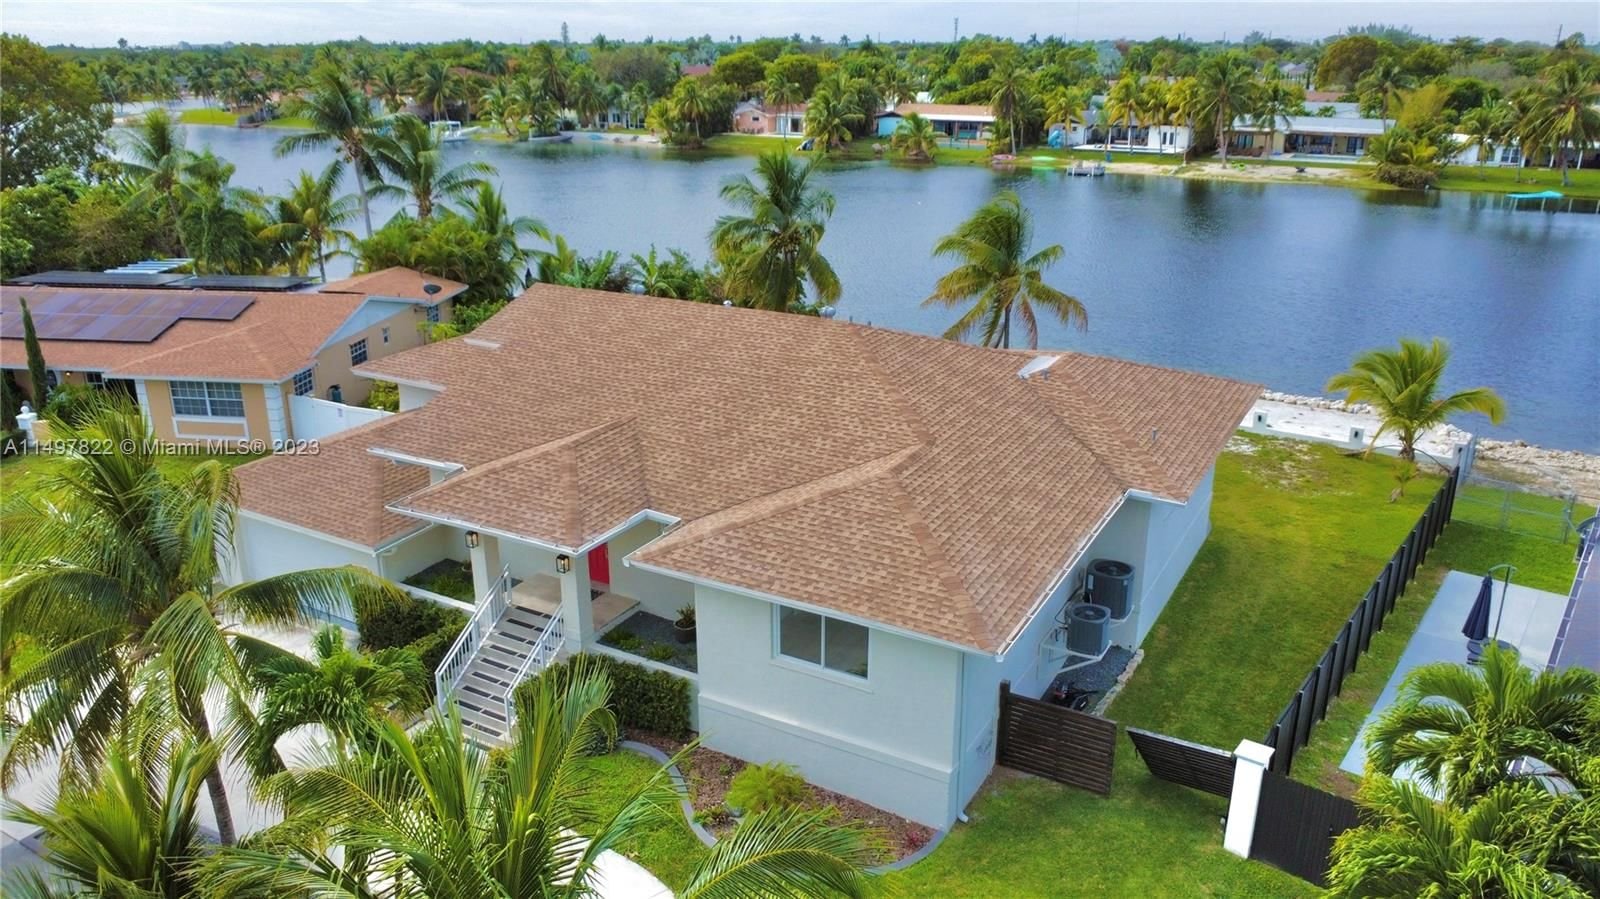 Real estate property located at 19910 81st Ct, Miami-Dade County, SAGA BAY SEC 1 PT 6, Cutler Bay, FL